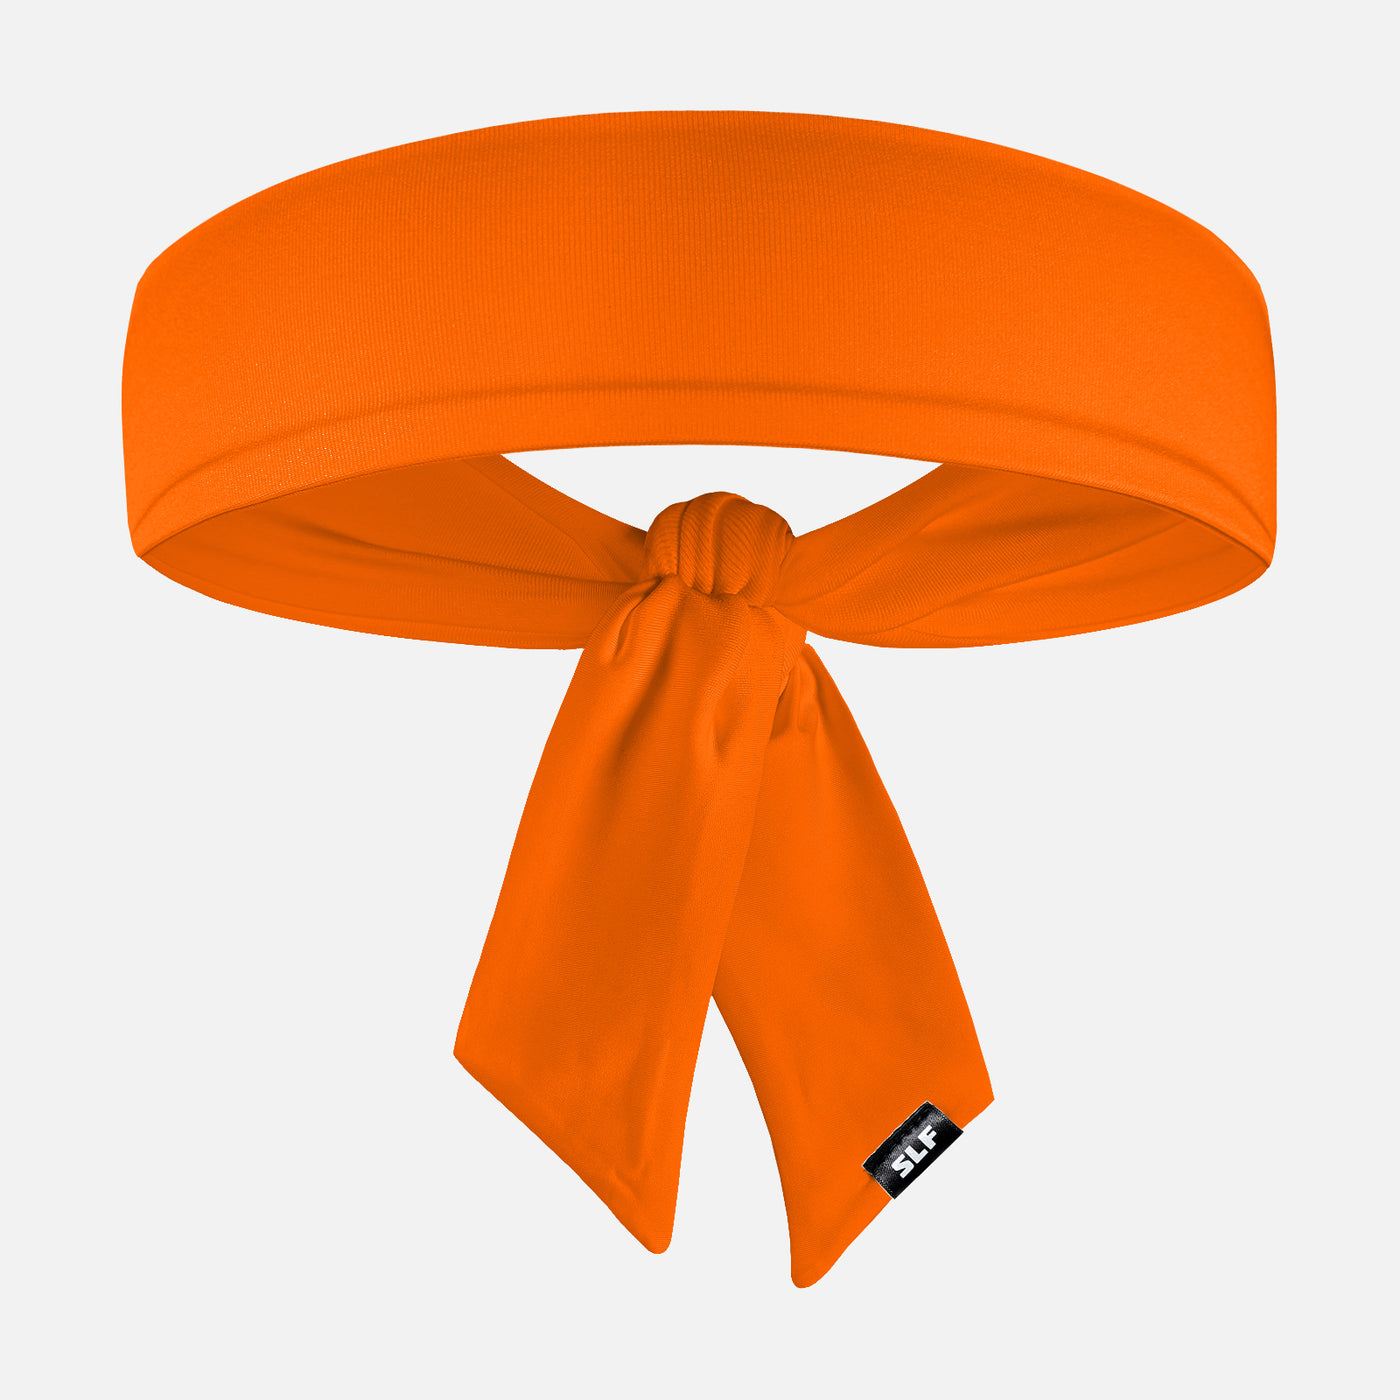 Hot Orange Ninja Headband